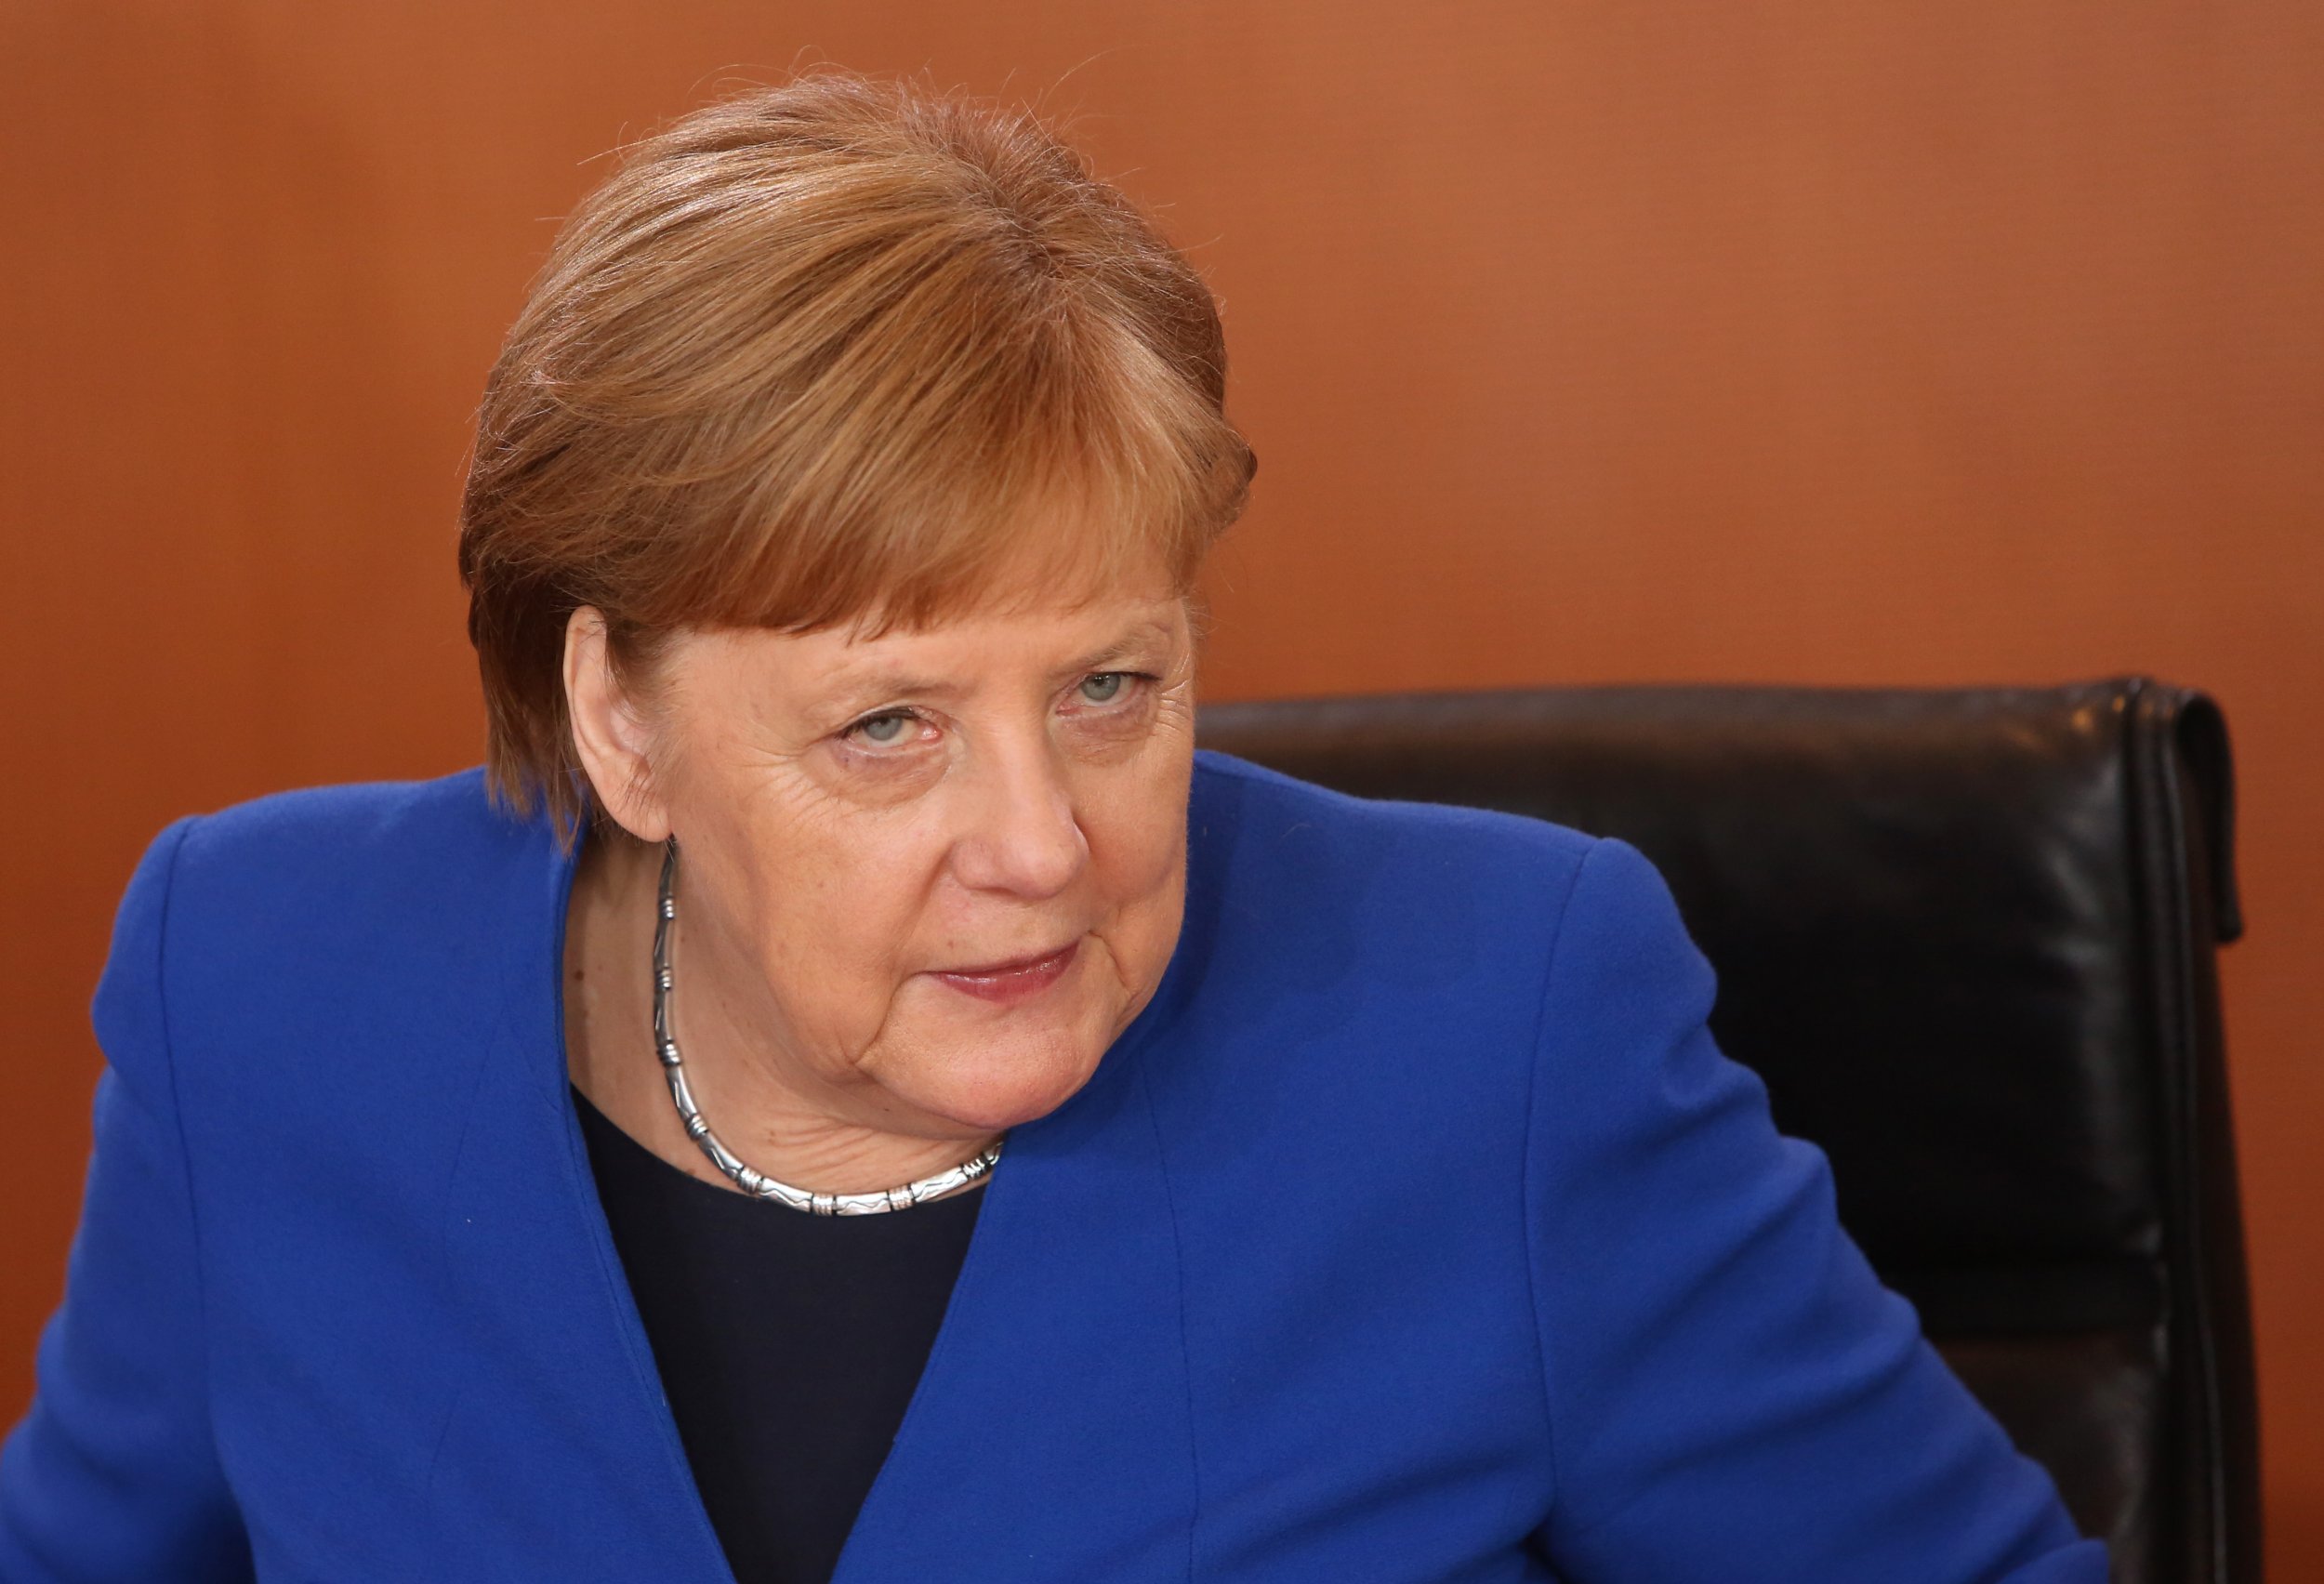 Angela Merkel Vows to Keep Sanctions on Russia Until it Returns Crimea